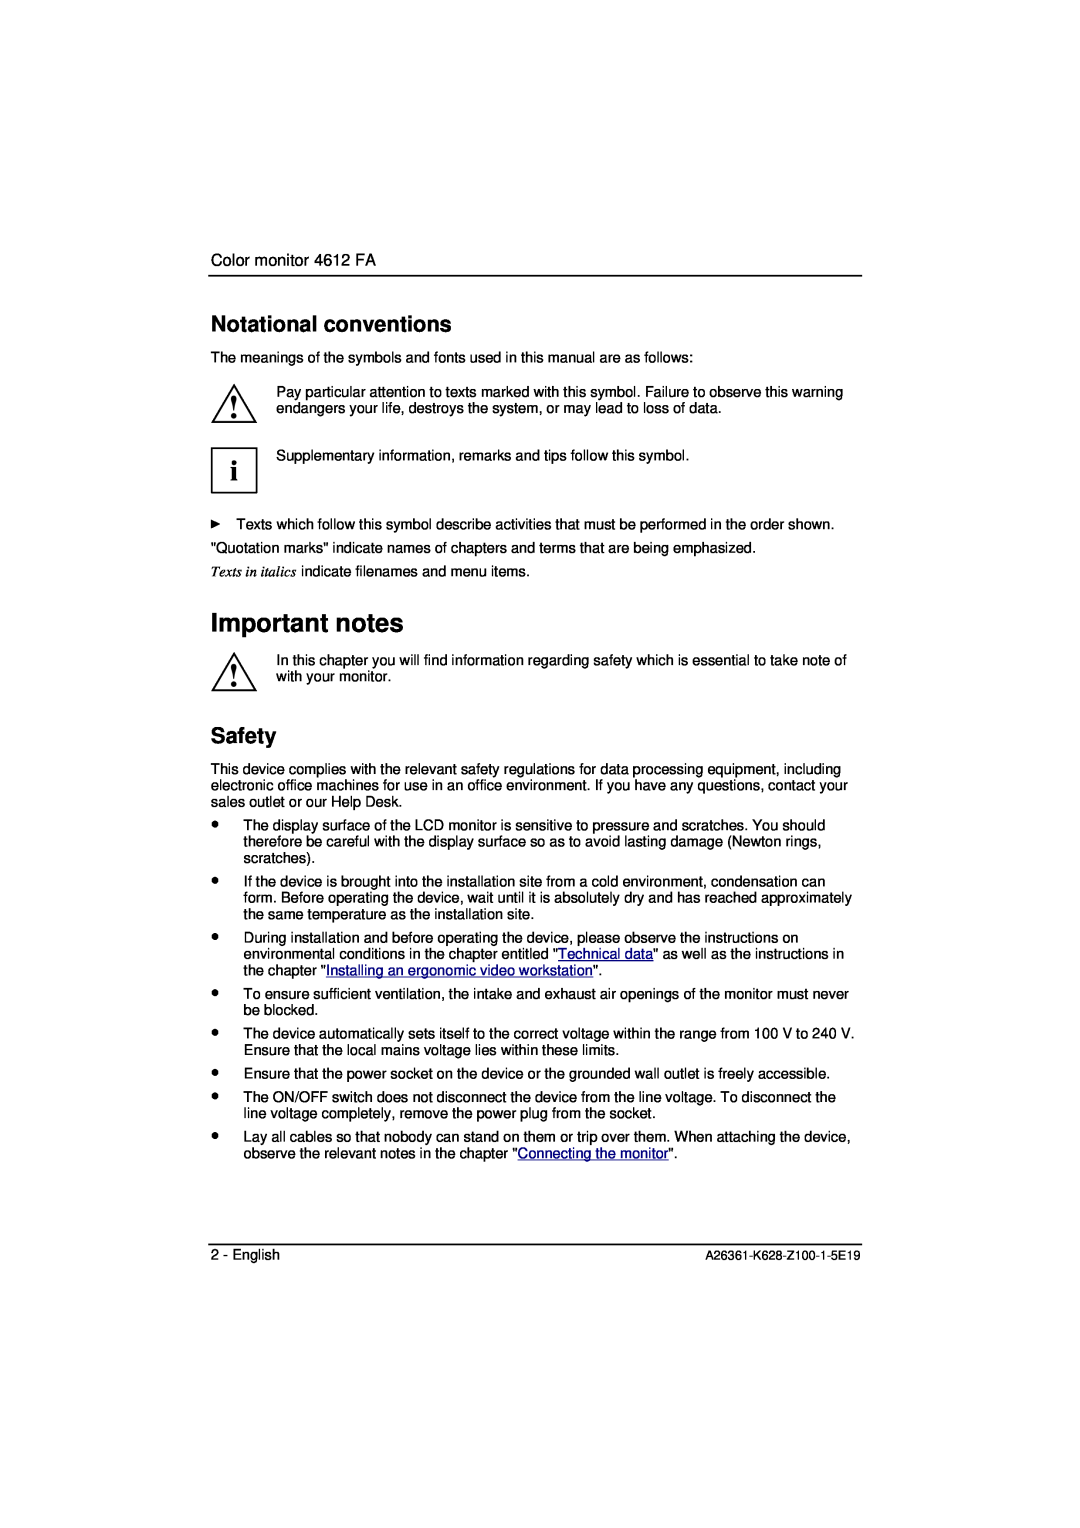 Fujitsu Siemens Computers manual Important notes, Notational conventions, Safety, Color monitor 4612 FA 